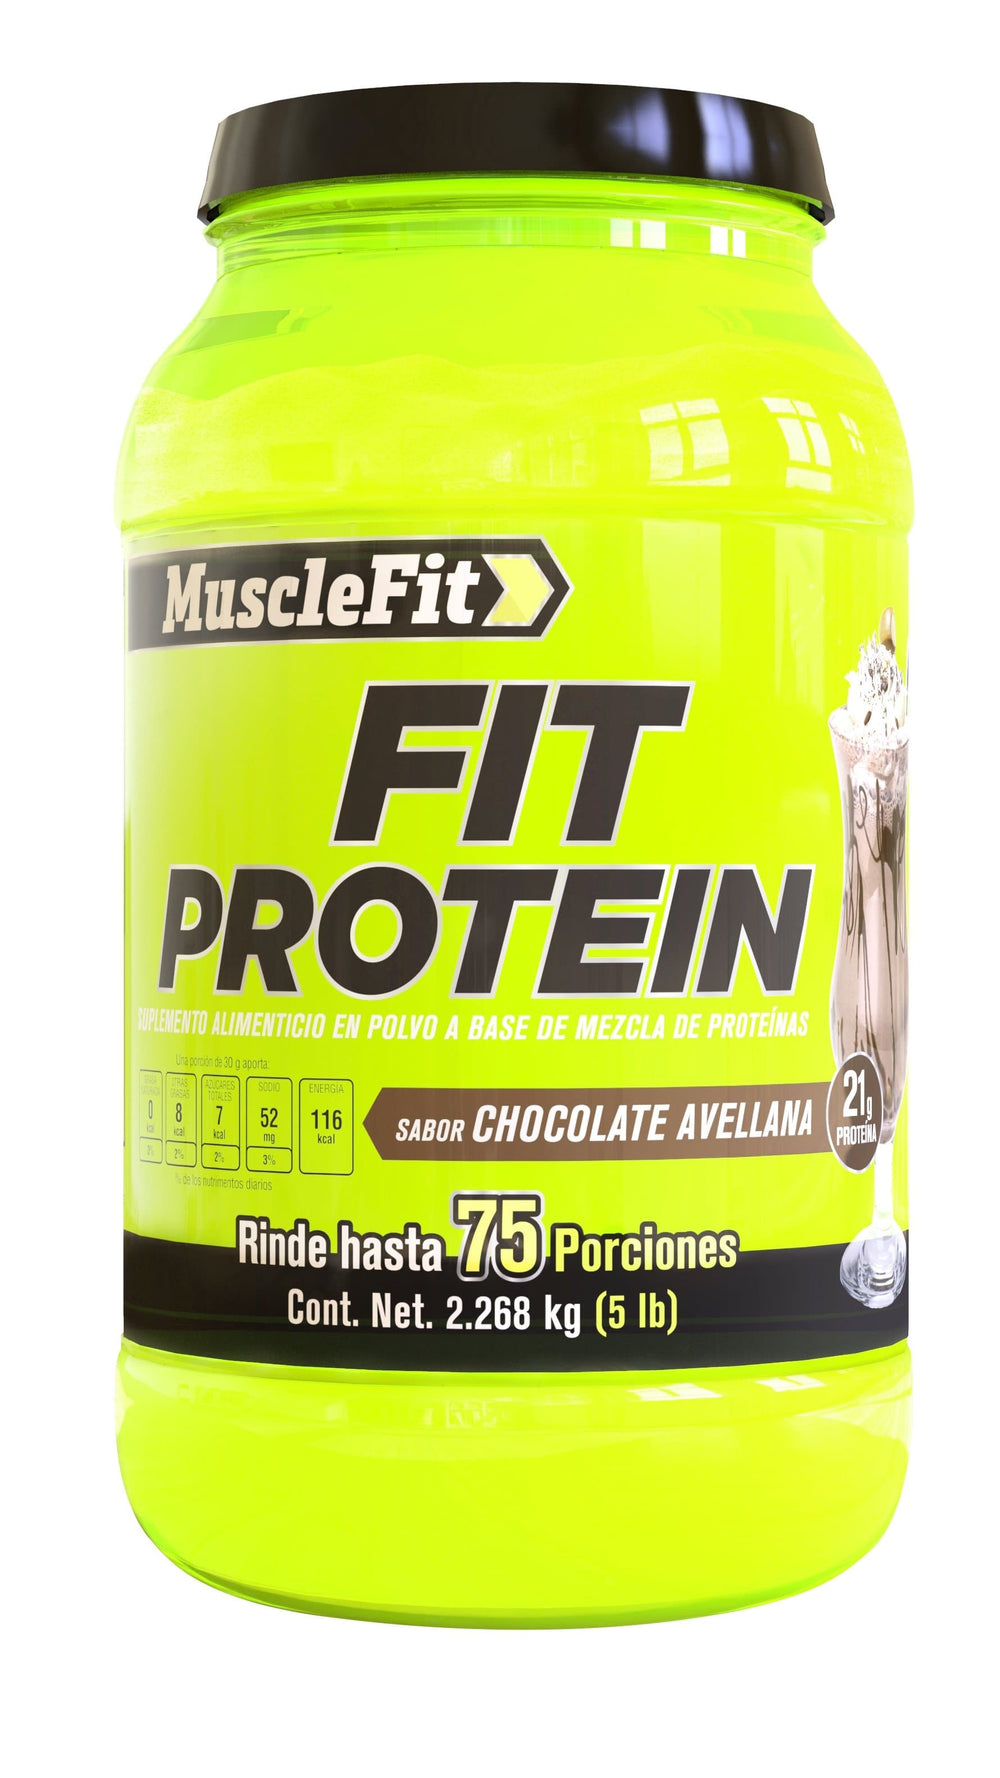 FIT PROTEIN - Proteína Suero de Leche  ( 5 Lb - 75 servicios ) - MuscleFit